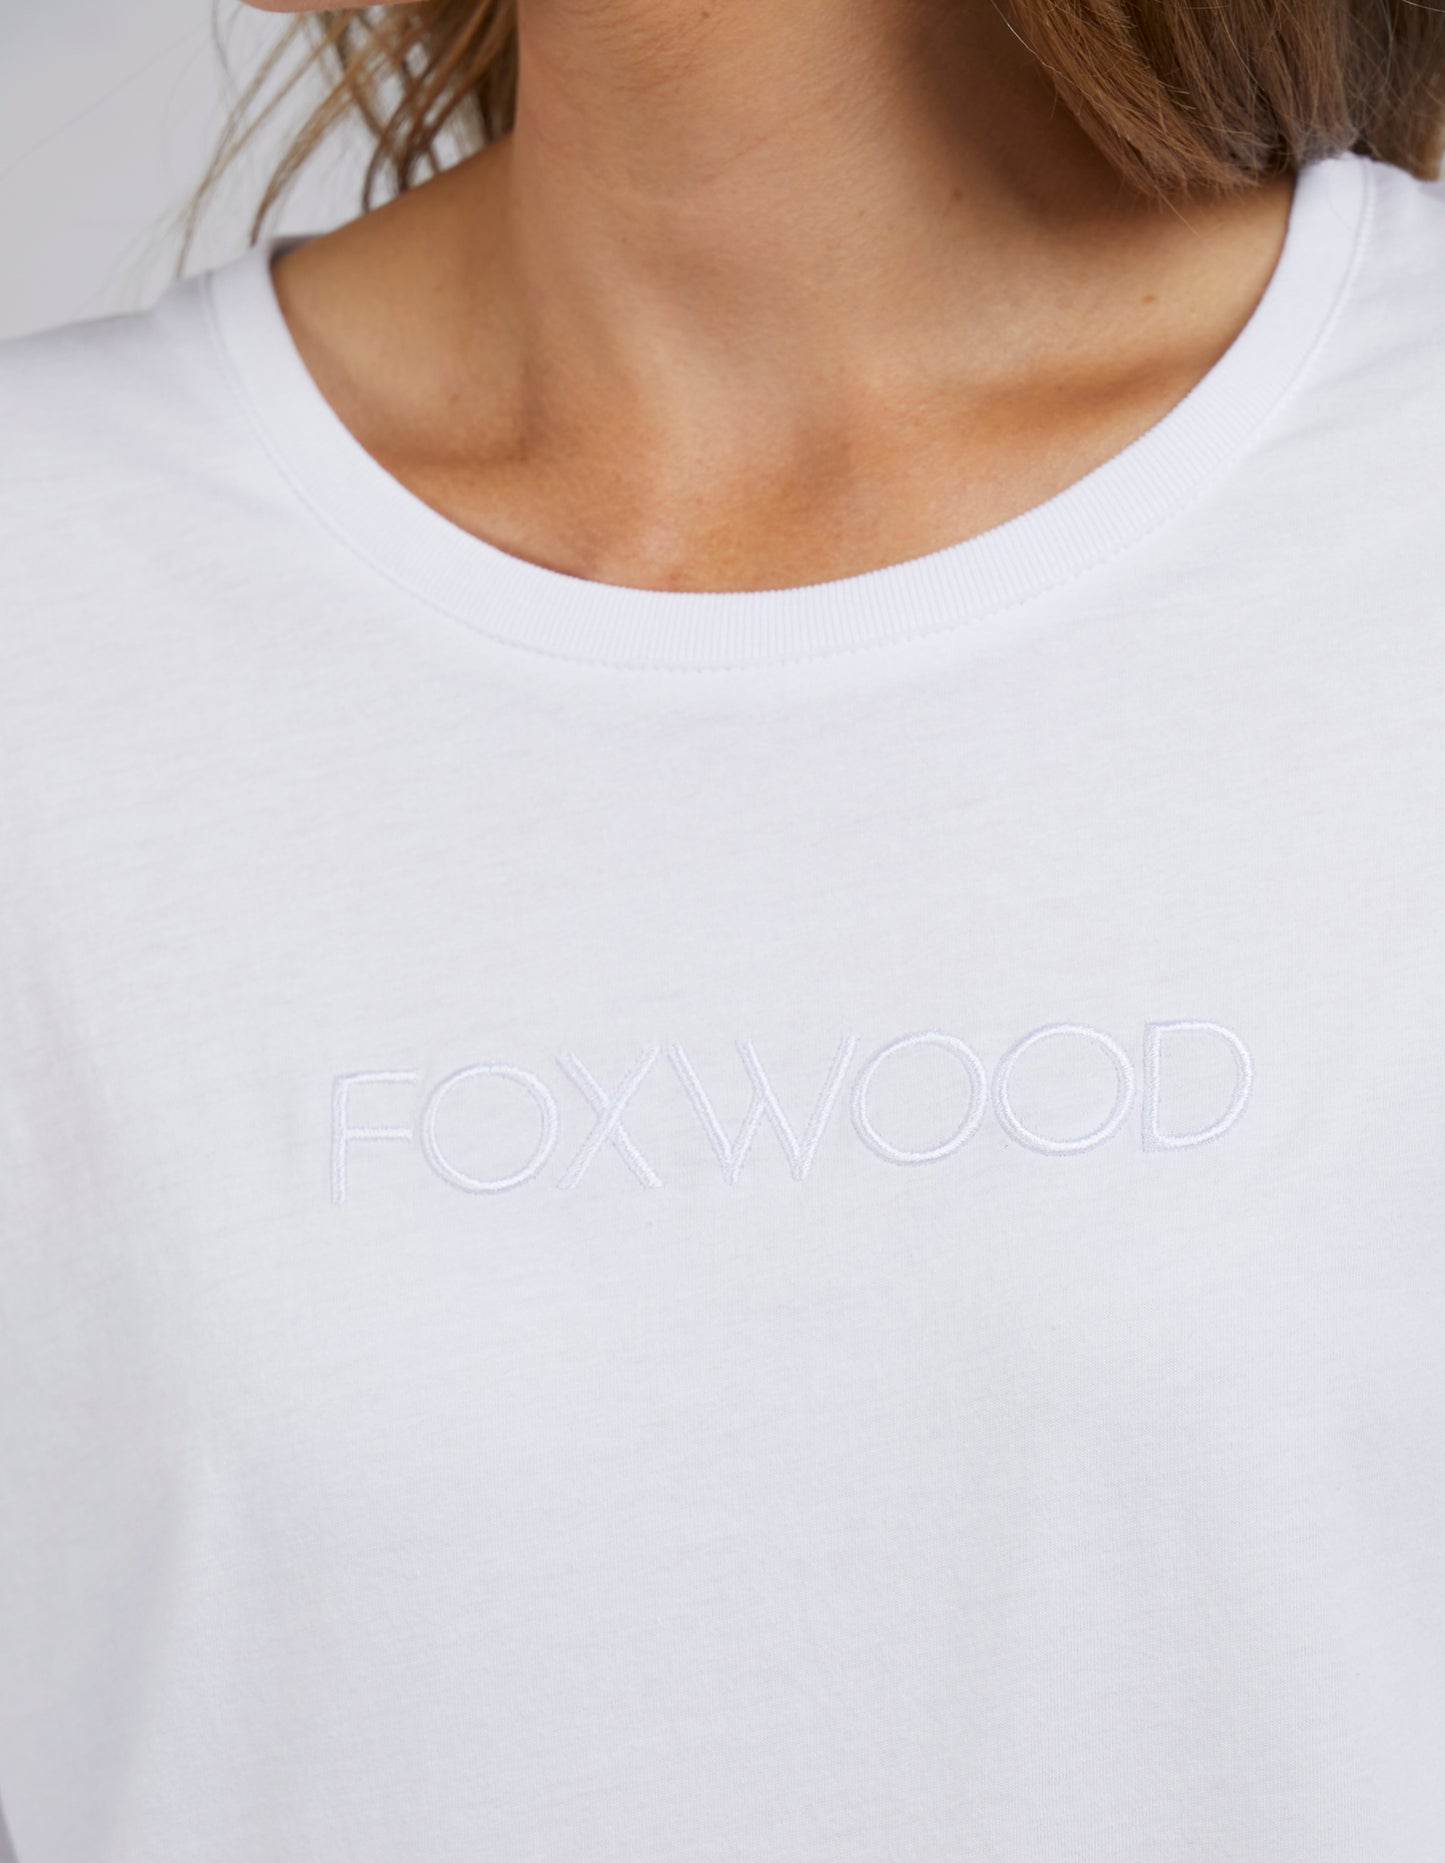 Foxwood L/S Tee - White - Foxwood - FUDGE Gifts Home Lifestyle